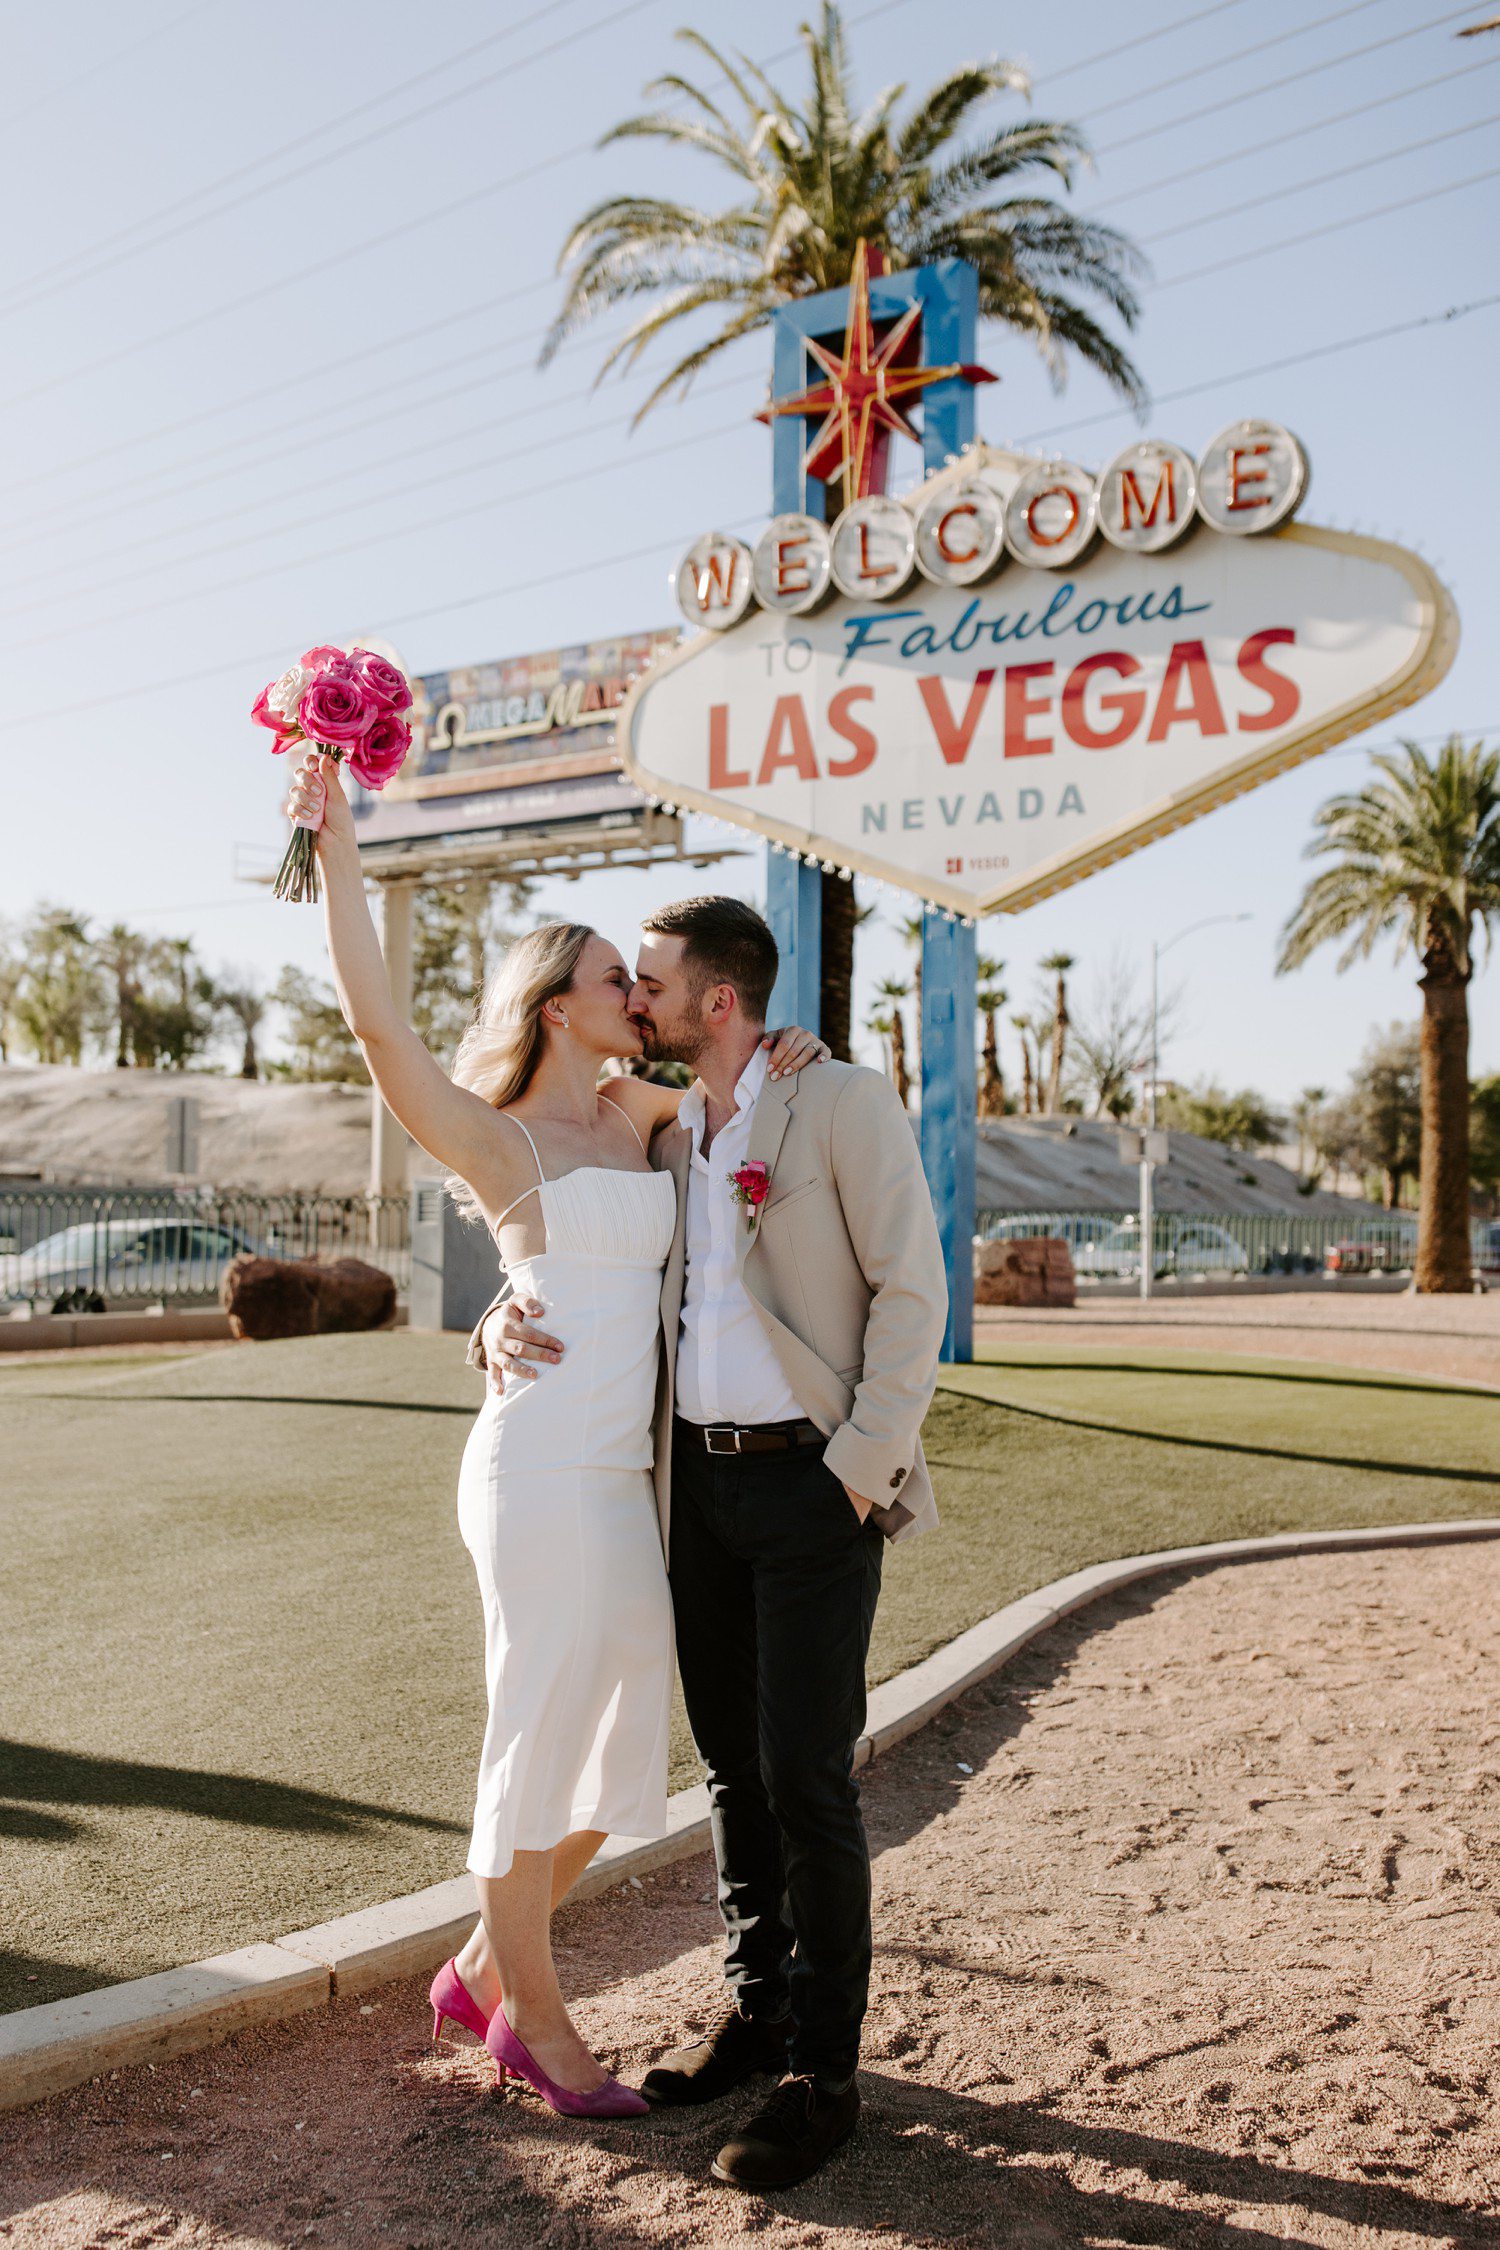 Wedding photos at the Las Vegas sign.